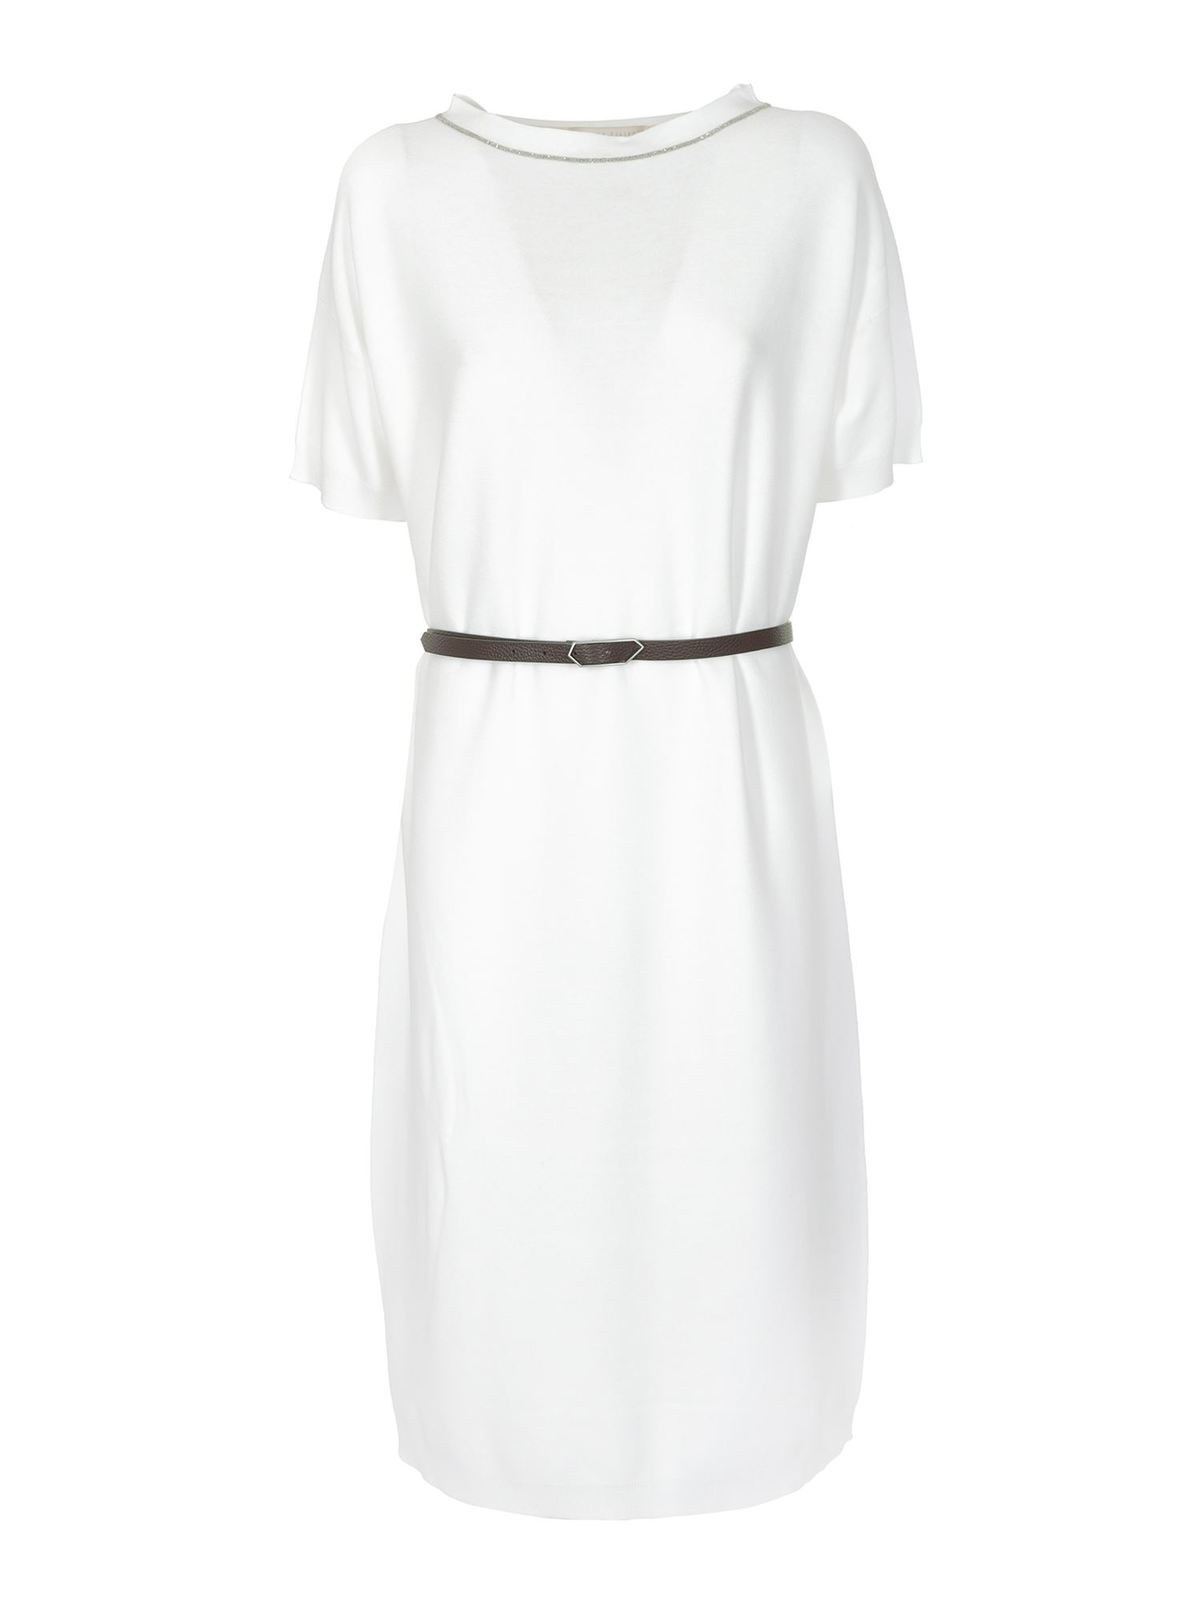 FABIANA FILIPPI BELTED DRESS IN WHITE